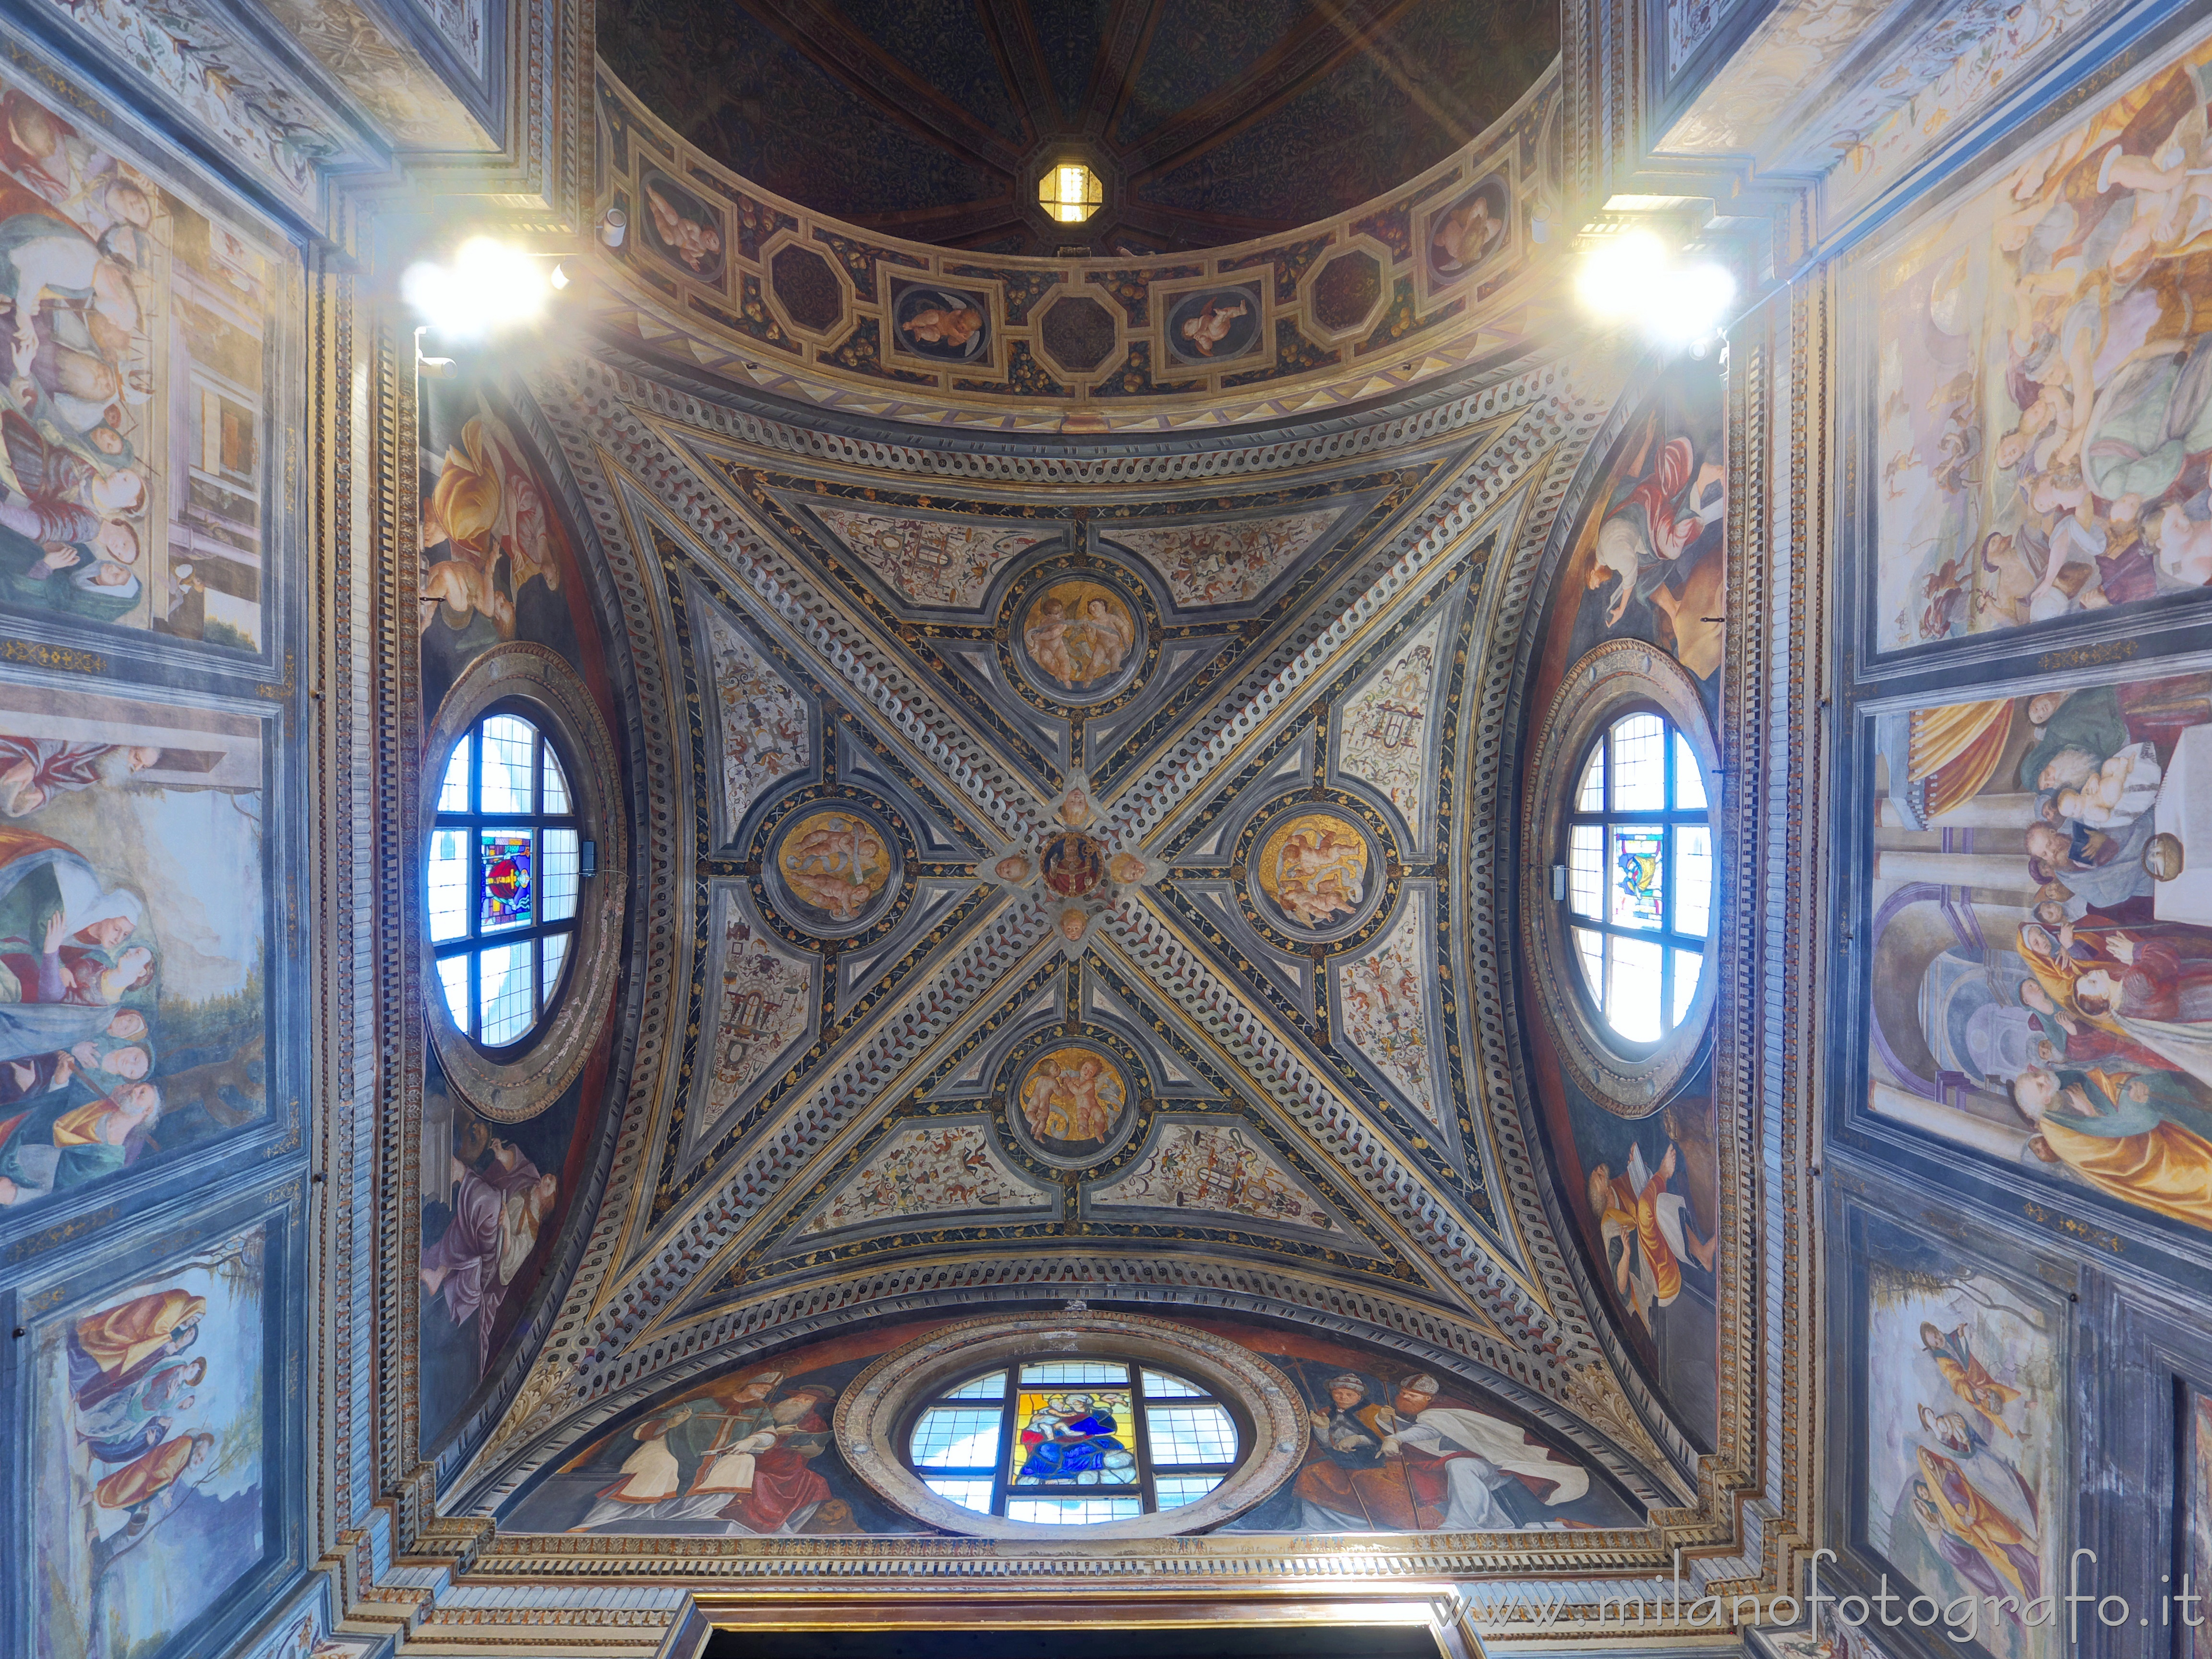 Legnano (Milan, Italy): Ceiling of the main chapel of the Basilica of San Magno - Legnano (Milan, Italy)